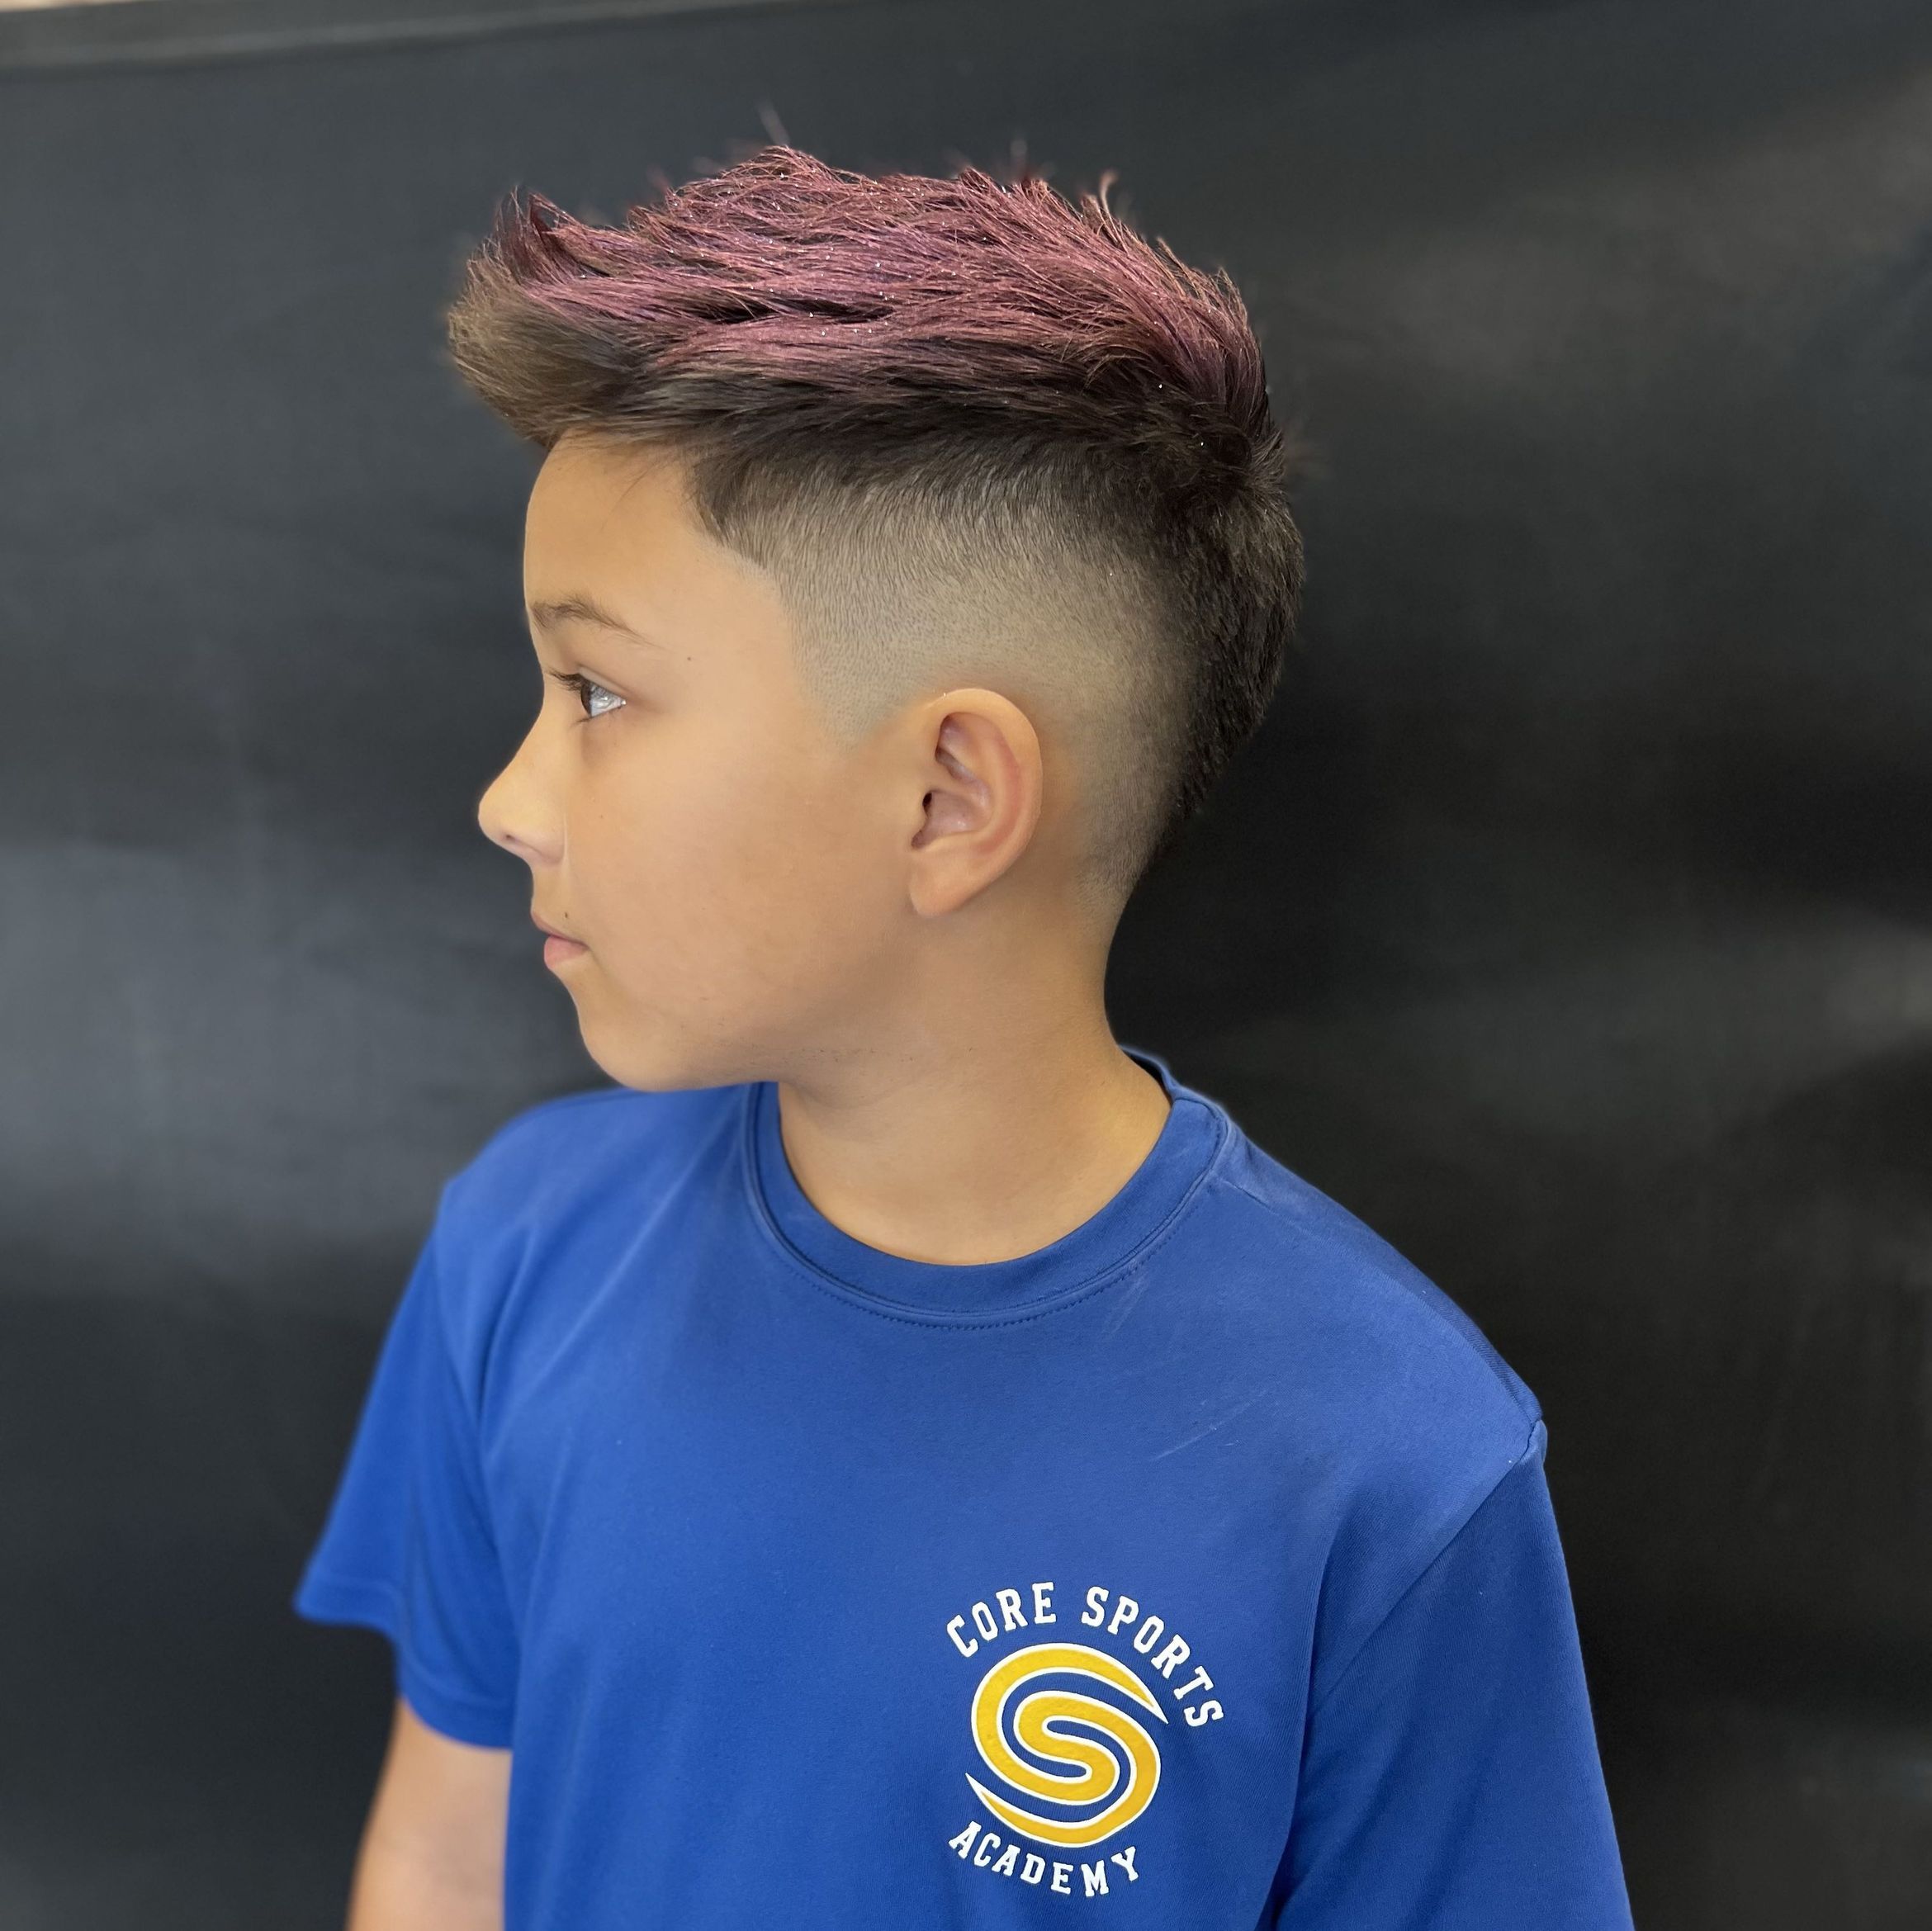 Kids Fade Haircut (12 and under) portfolio